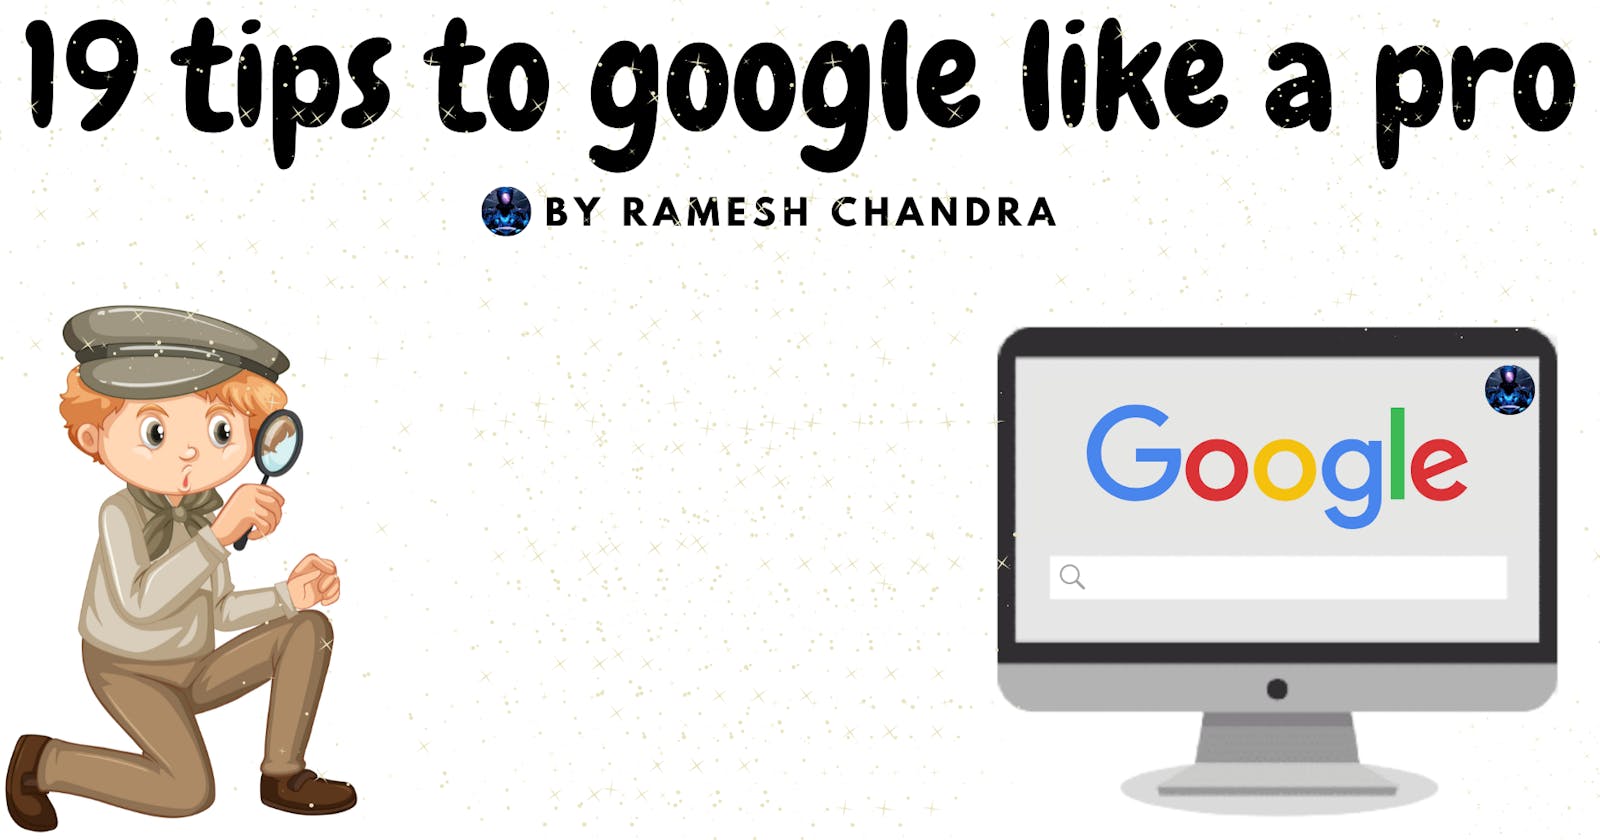 19 tips to Google like a pro